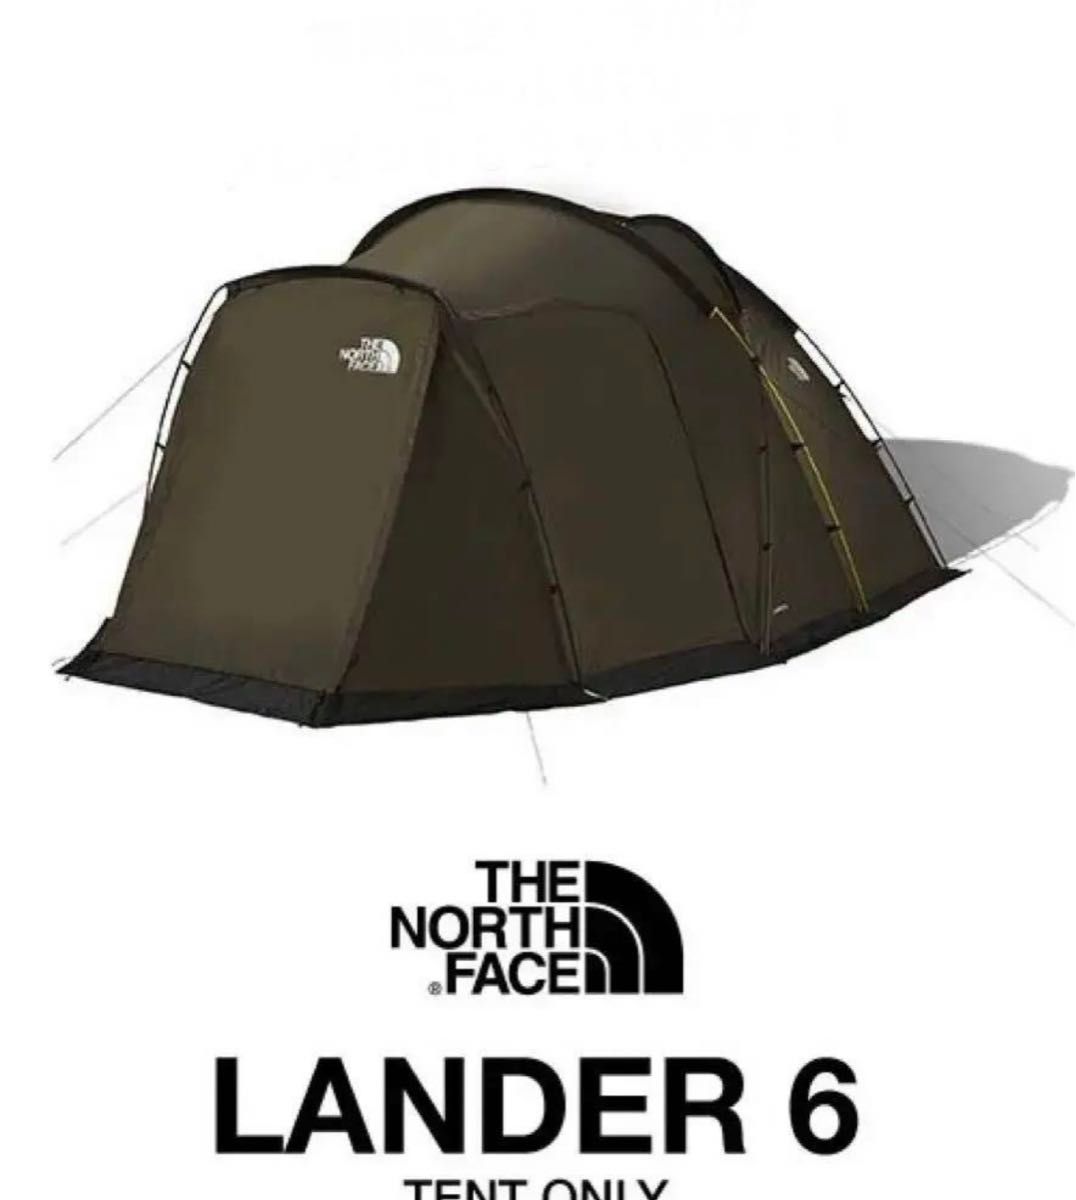 THE NORTH FACE Lander 6 &タープセット